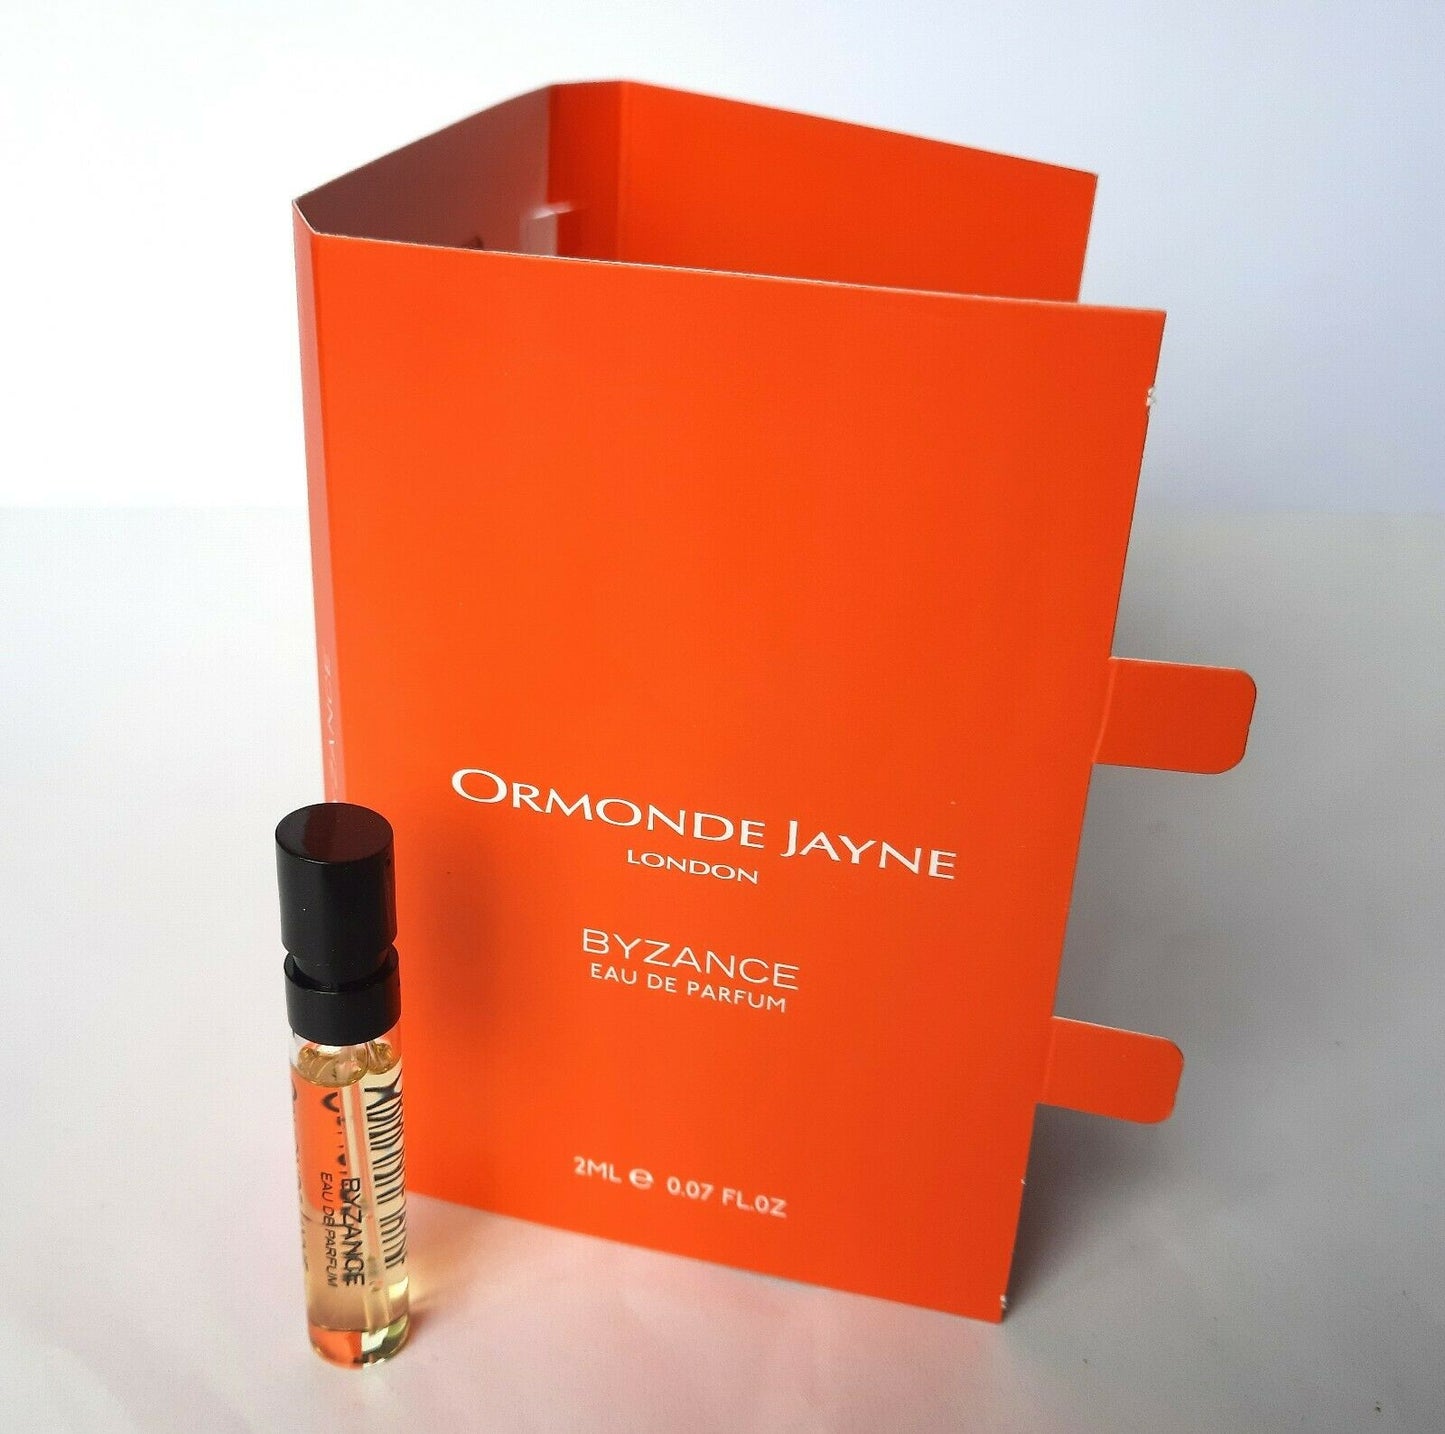 Ormonde Jayne Byzance official scent samples 2ml 0.06 fl. oz.